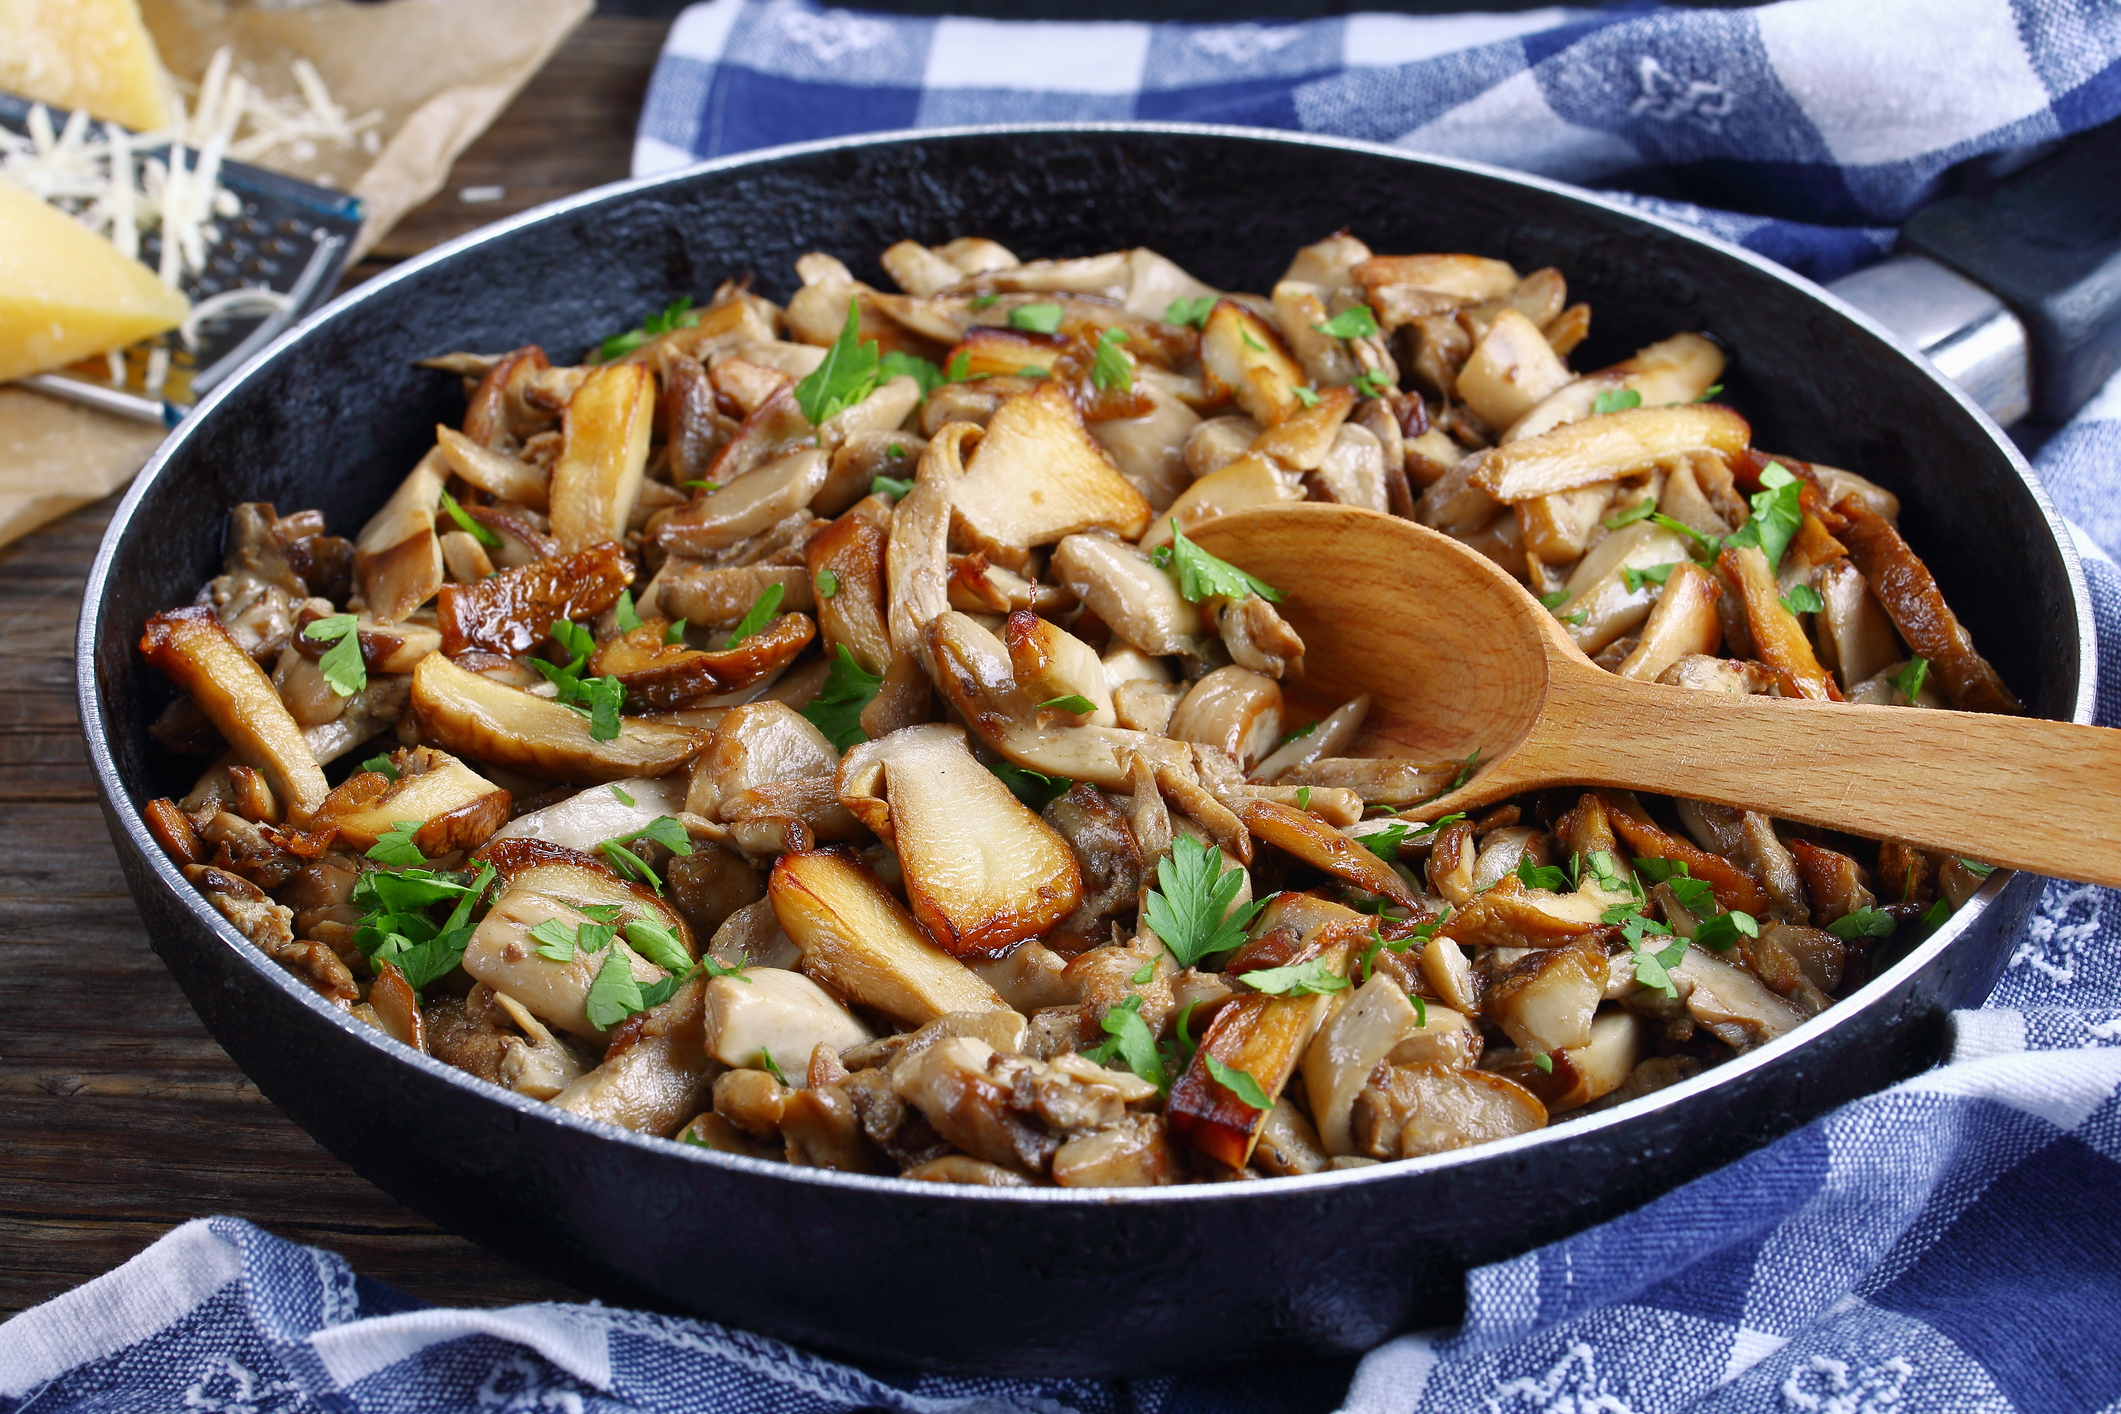 Приготовление грибов. Жареные грибы. Ӂ̈ӑ̈р̆̈ӗ̈н̆̈ы̆̈ӗ̈ Г̆̈р̆̈й̈б̆̈ы̆̈. Белые грибы жареные. Грибы на сковородке.